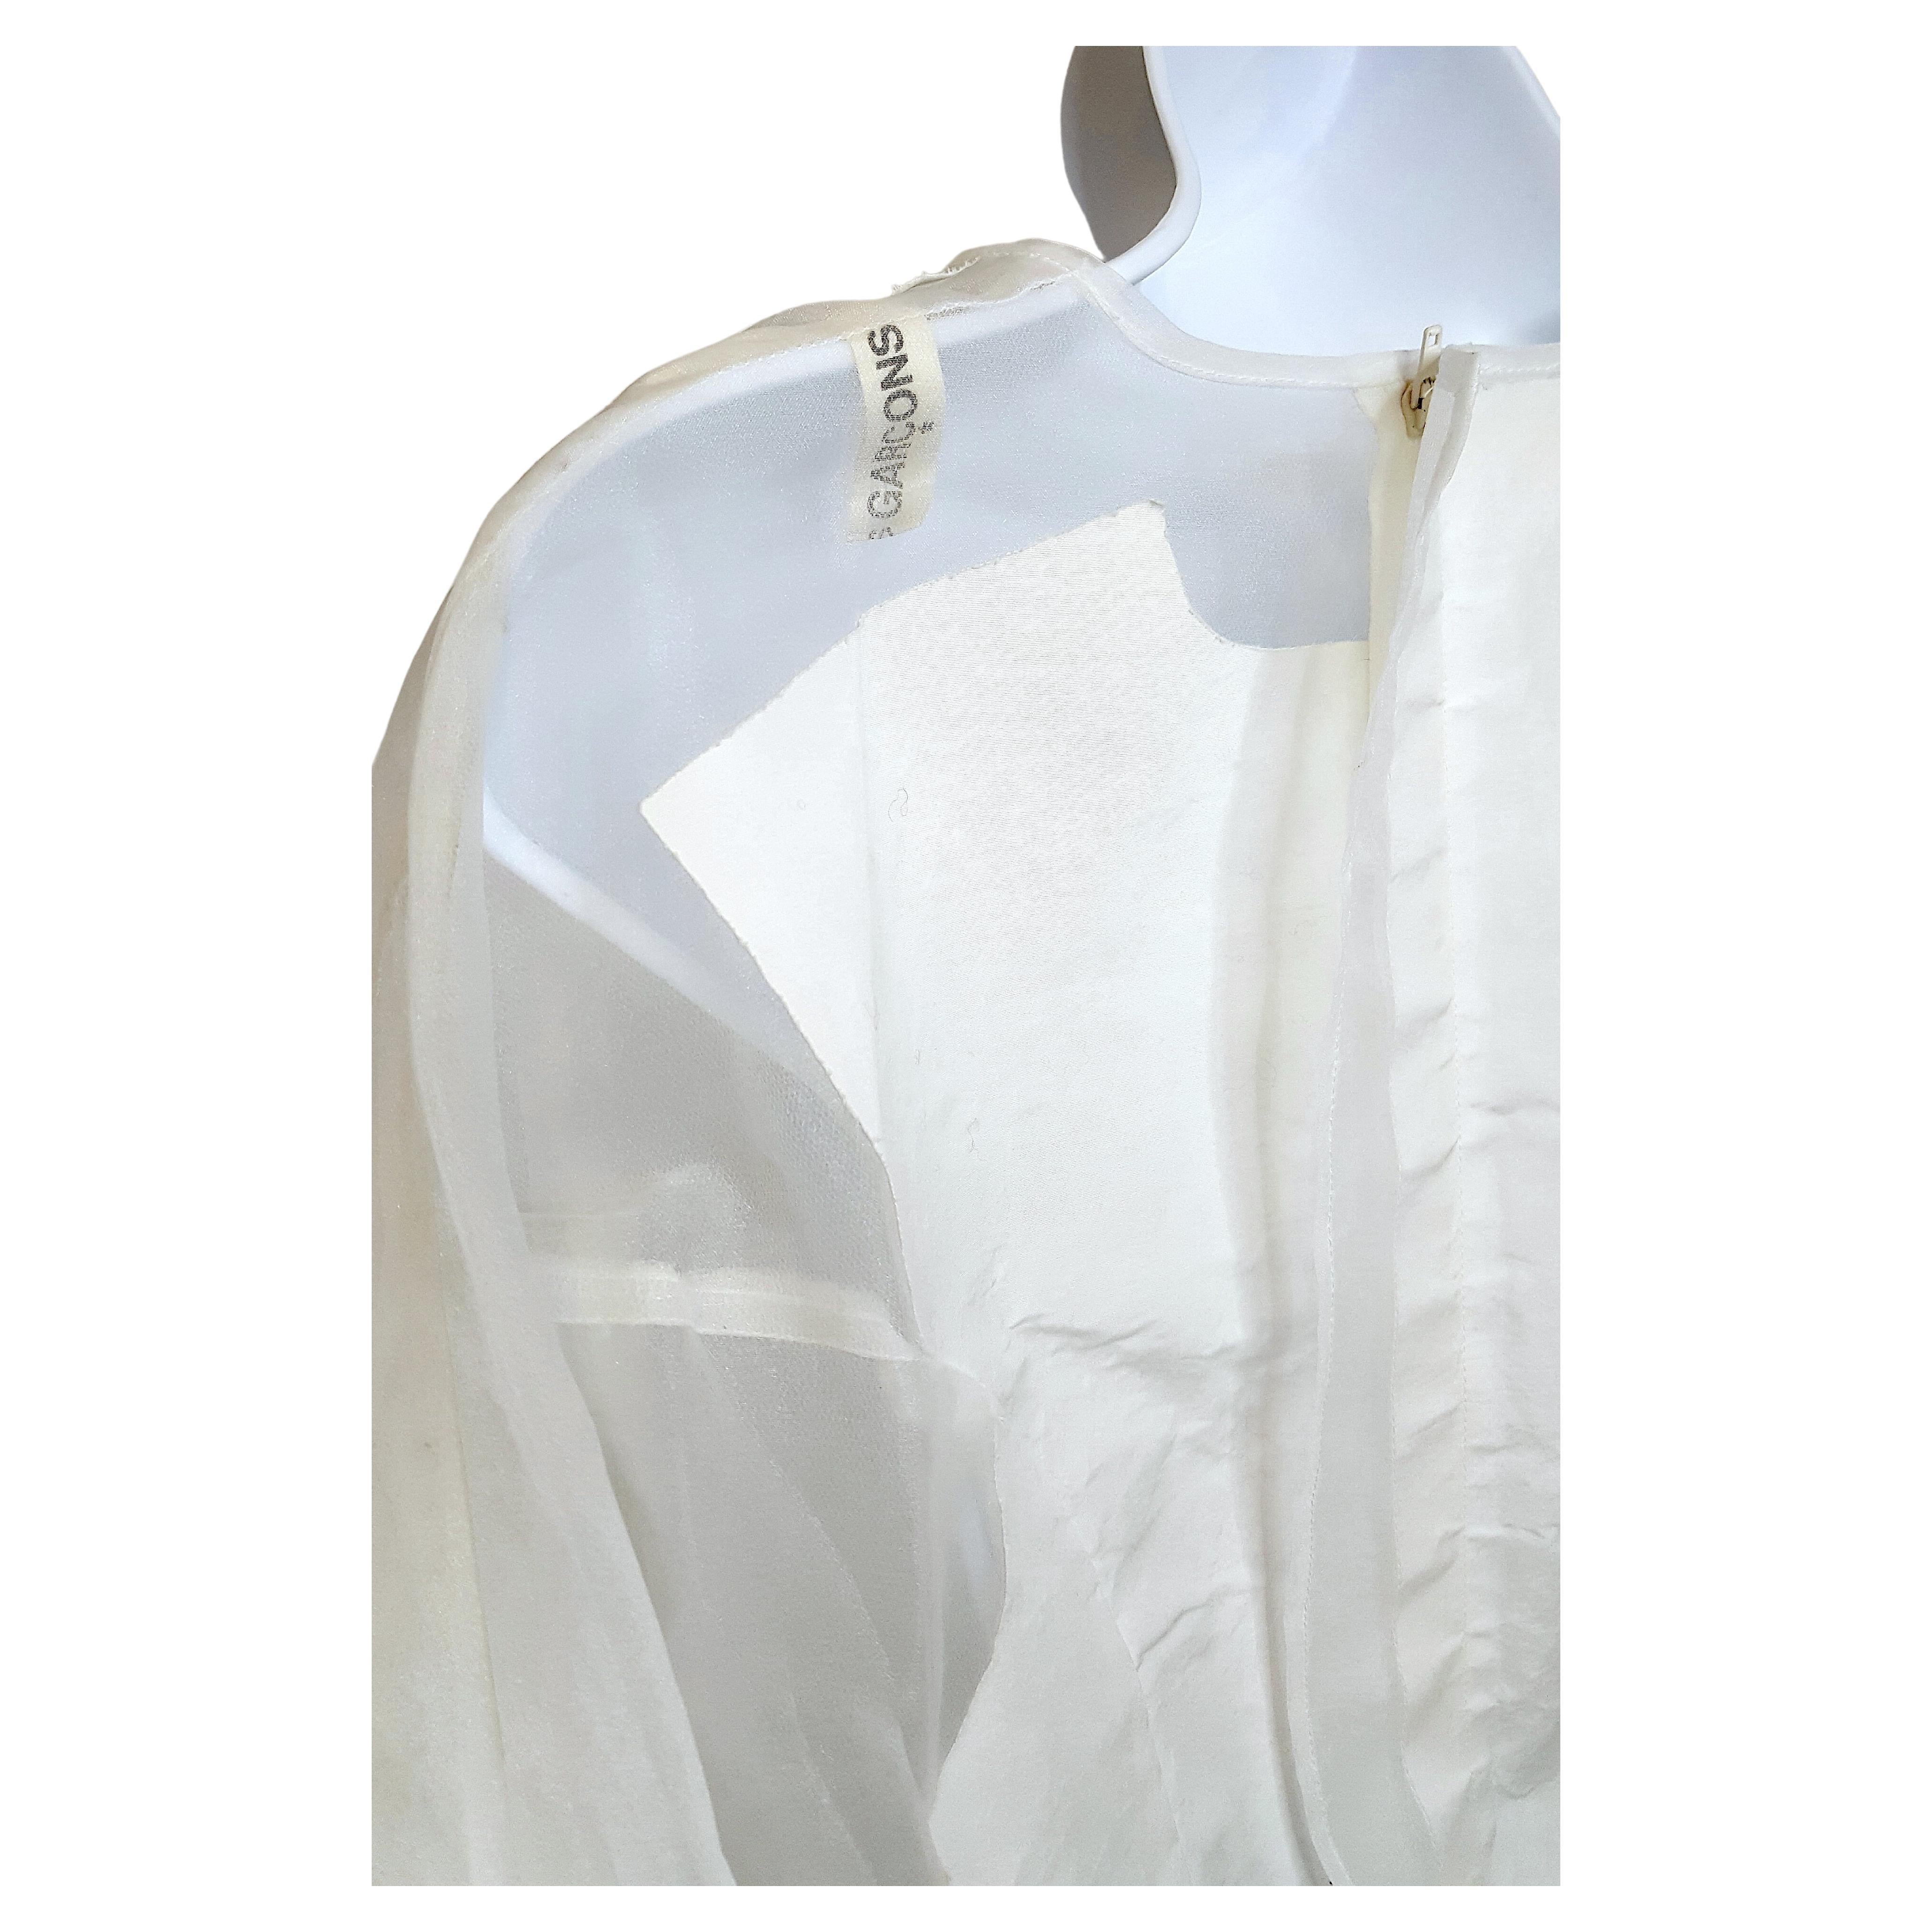 CommeDesGarcons 1997 AdultPunk Transparent EcruOrganza WhiteSilk Blouse Jacket  For Sale 6